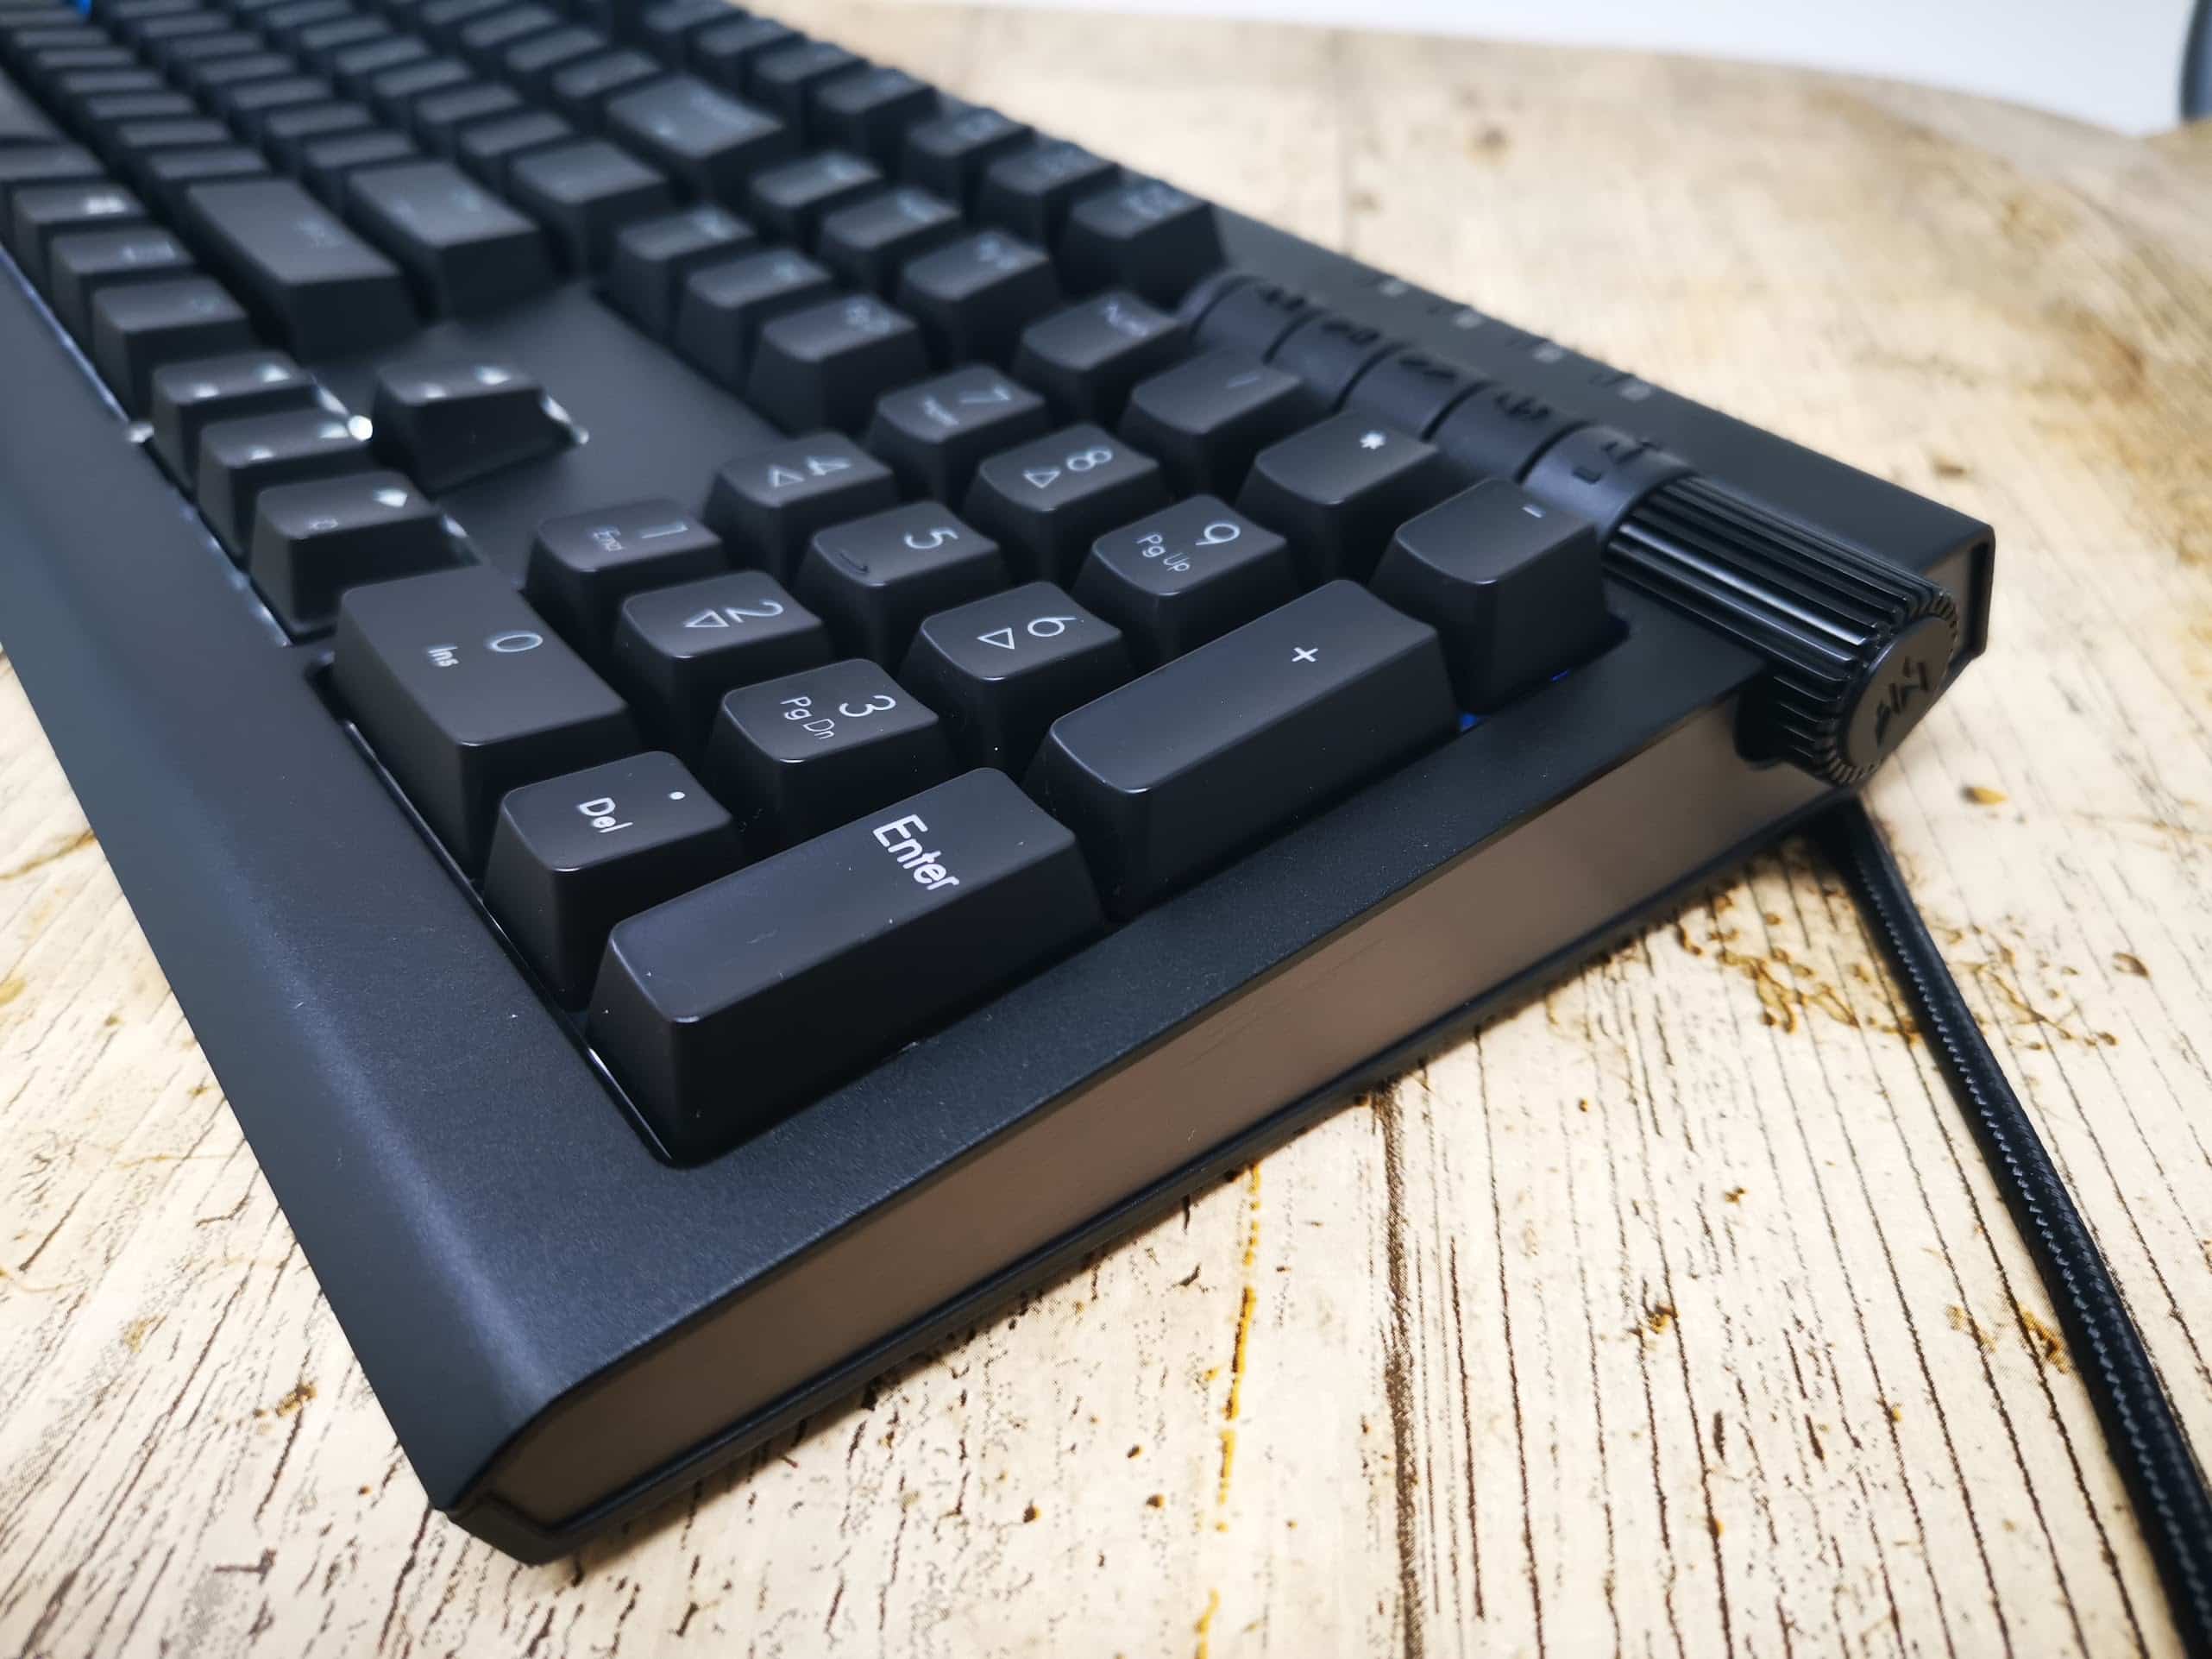  Acer  Predator Aethon 500 Mechanical Gaming  Keyboard  Review